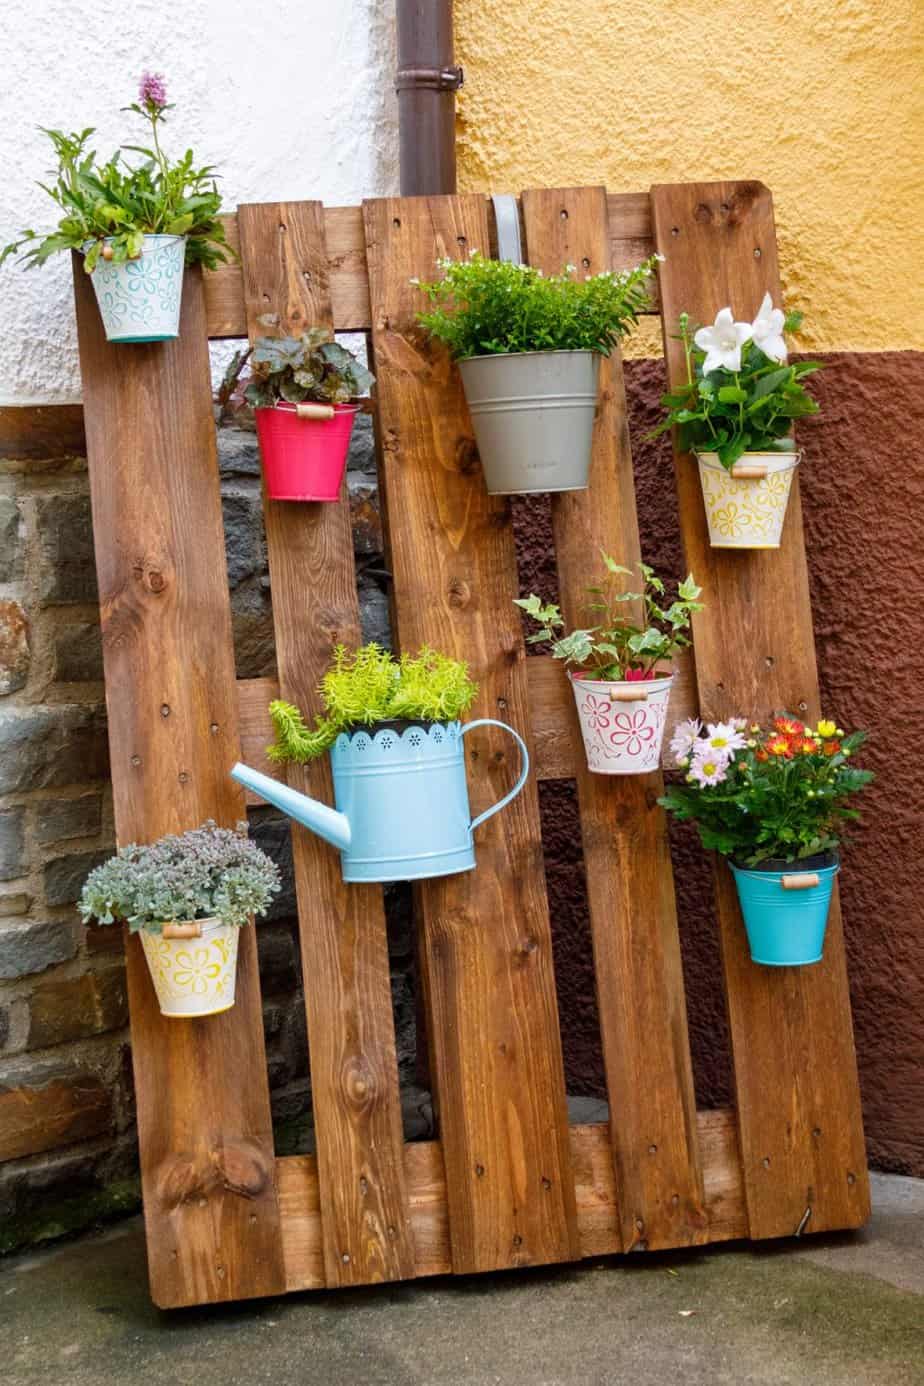 DIY pallet planters with various plant pots